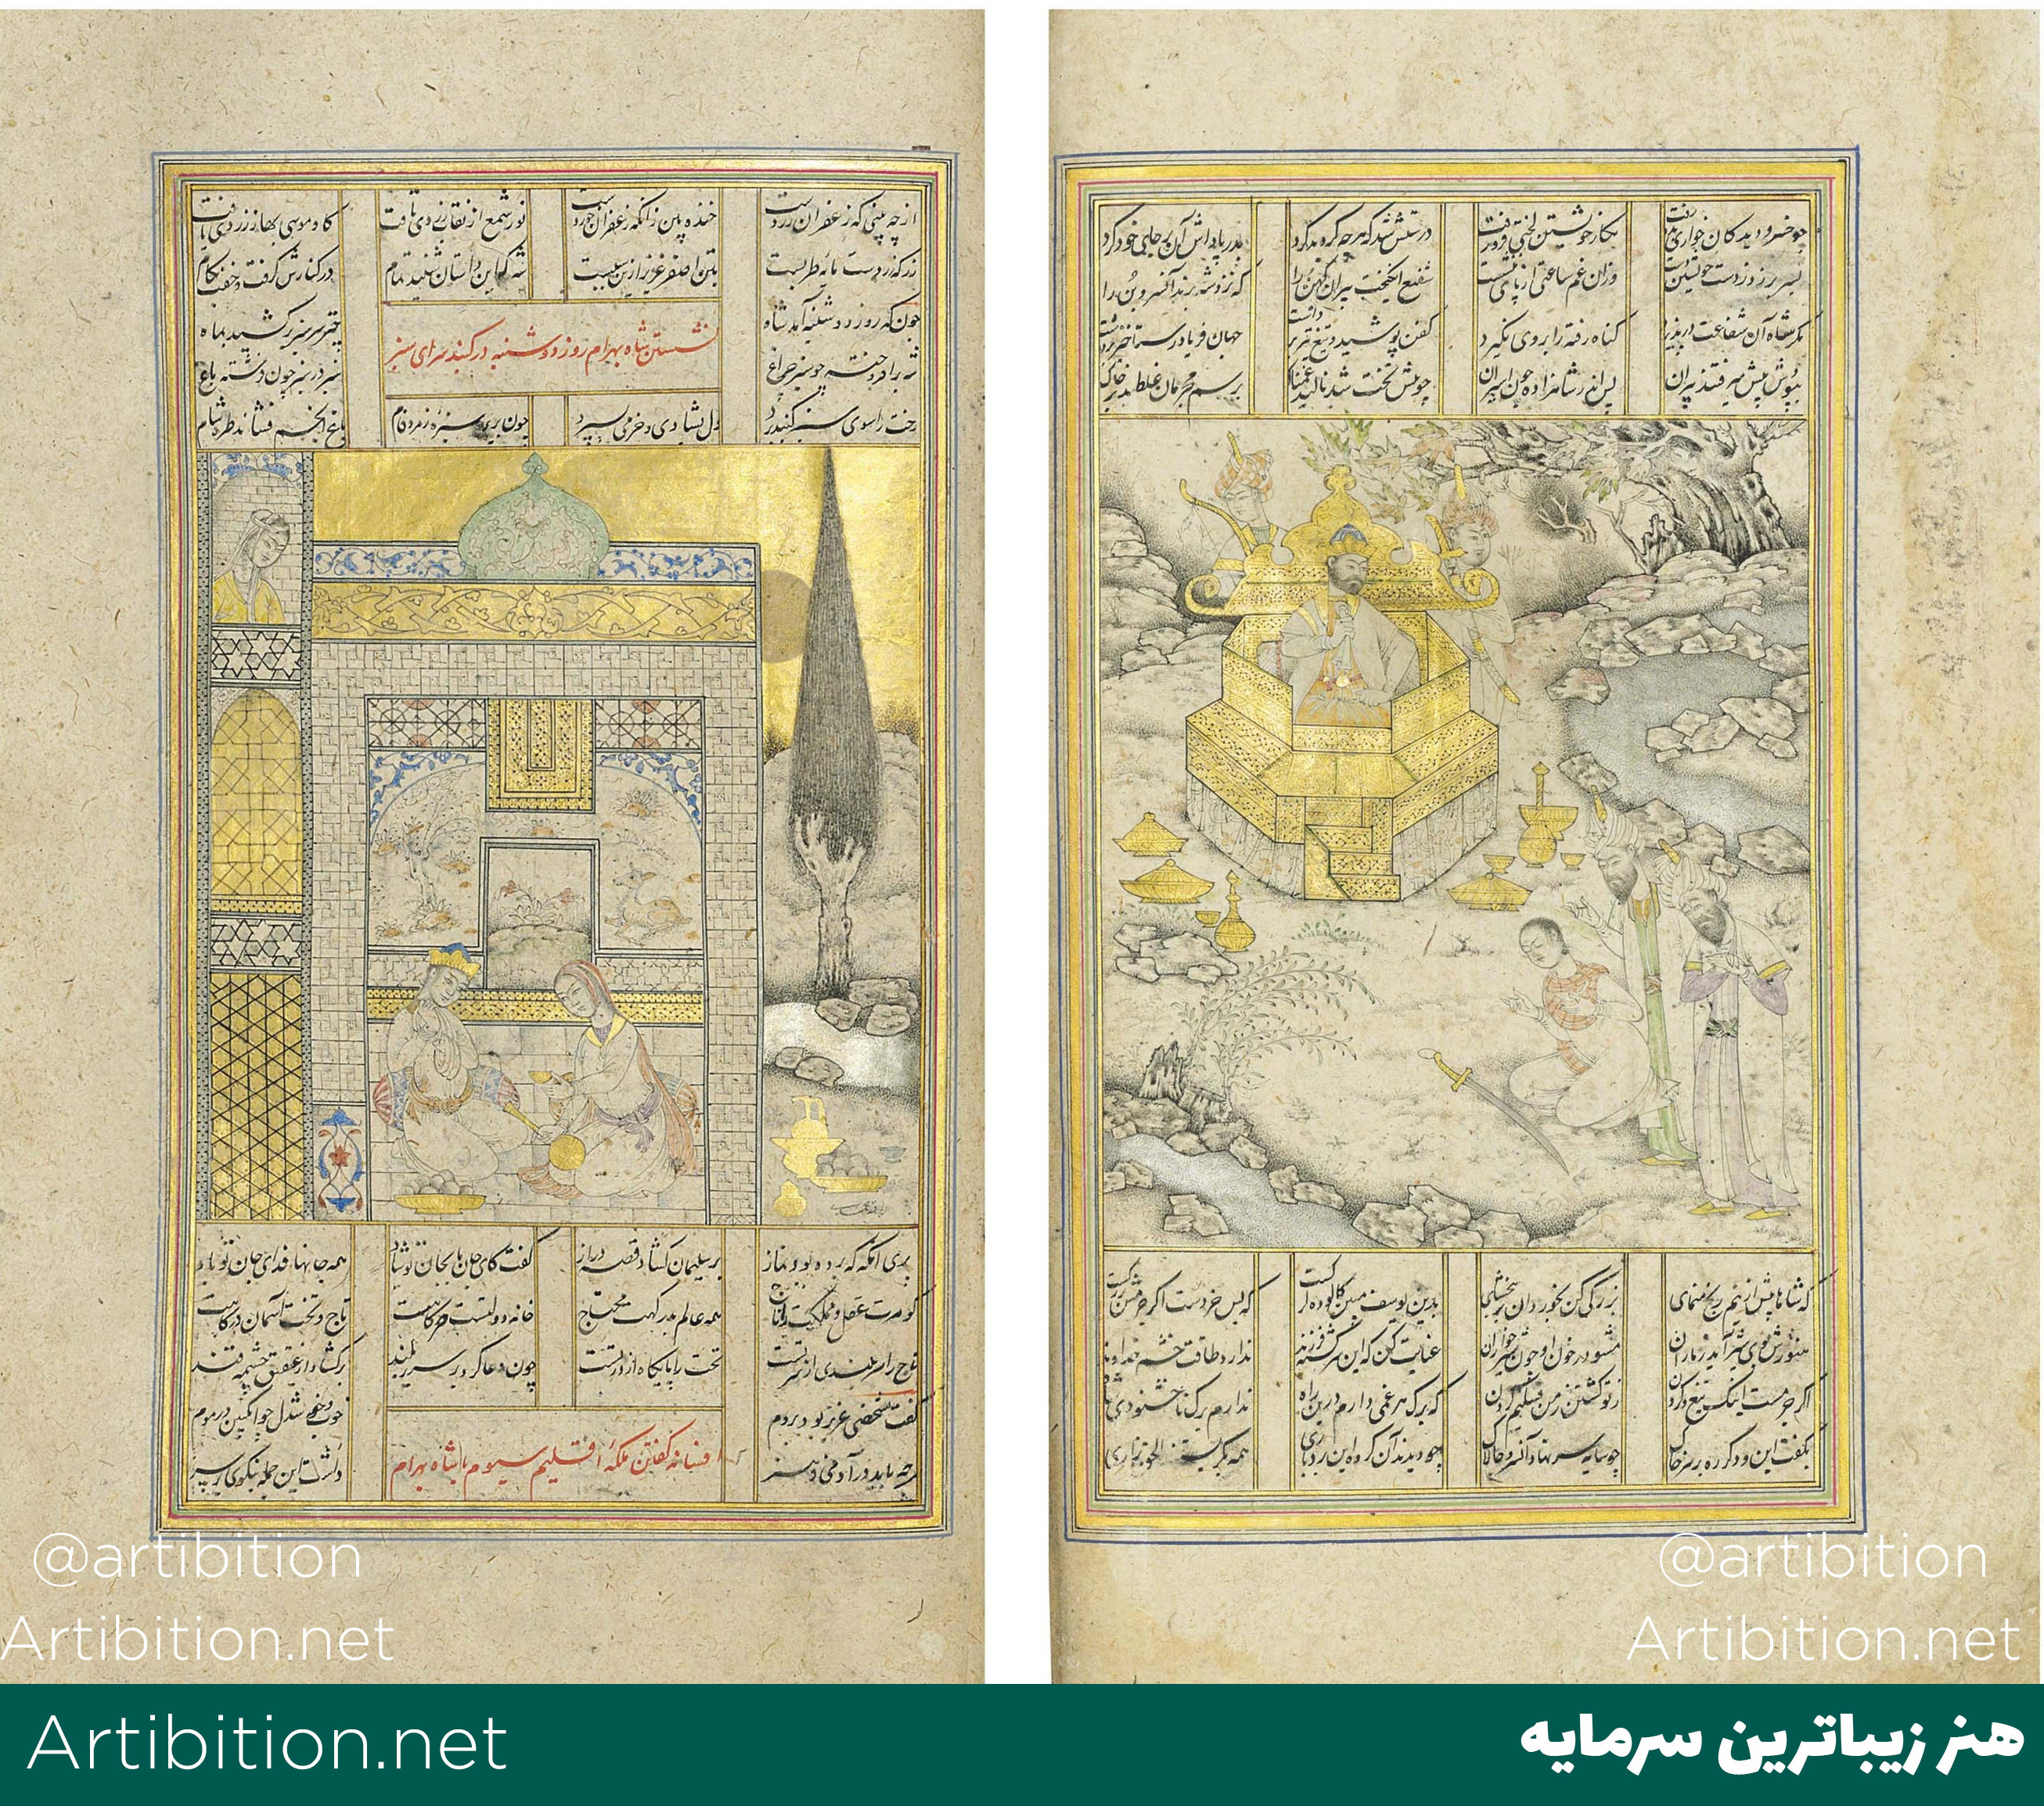  خمسه نظامی، به خط مرادعلی دماوندی، ایران دوره صفوی قرن 16